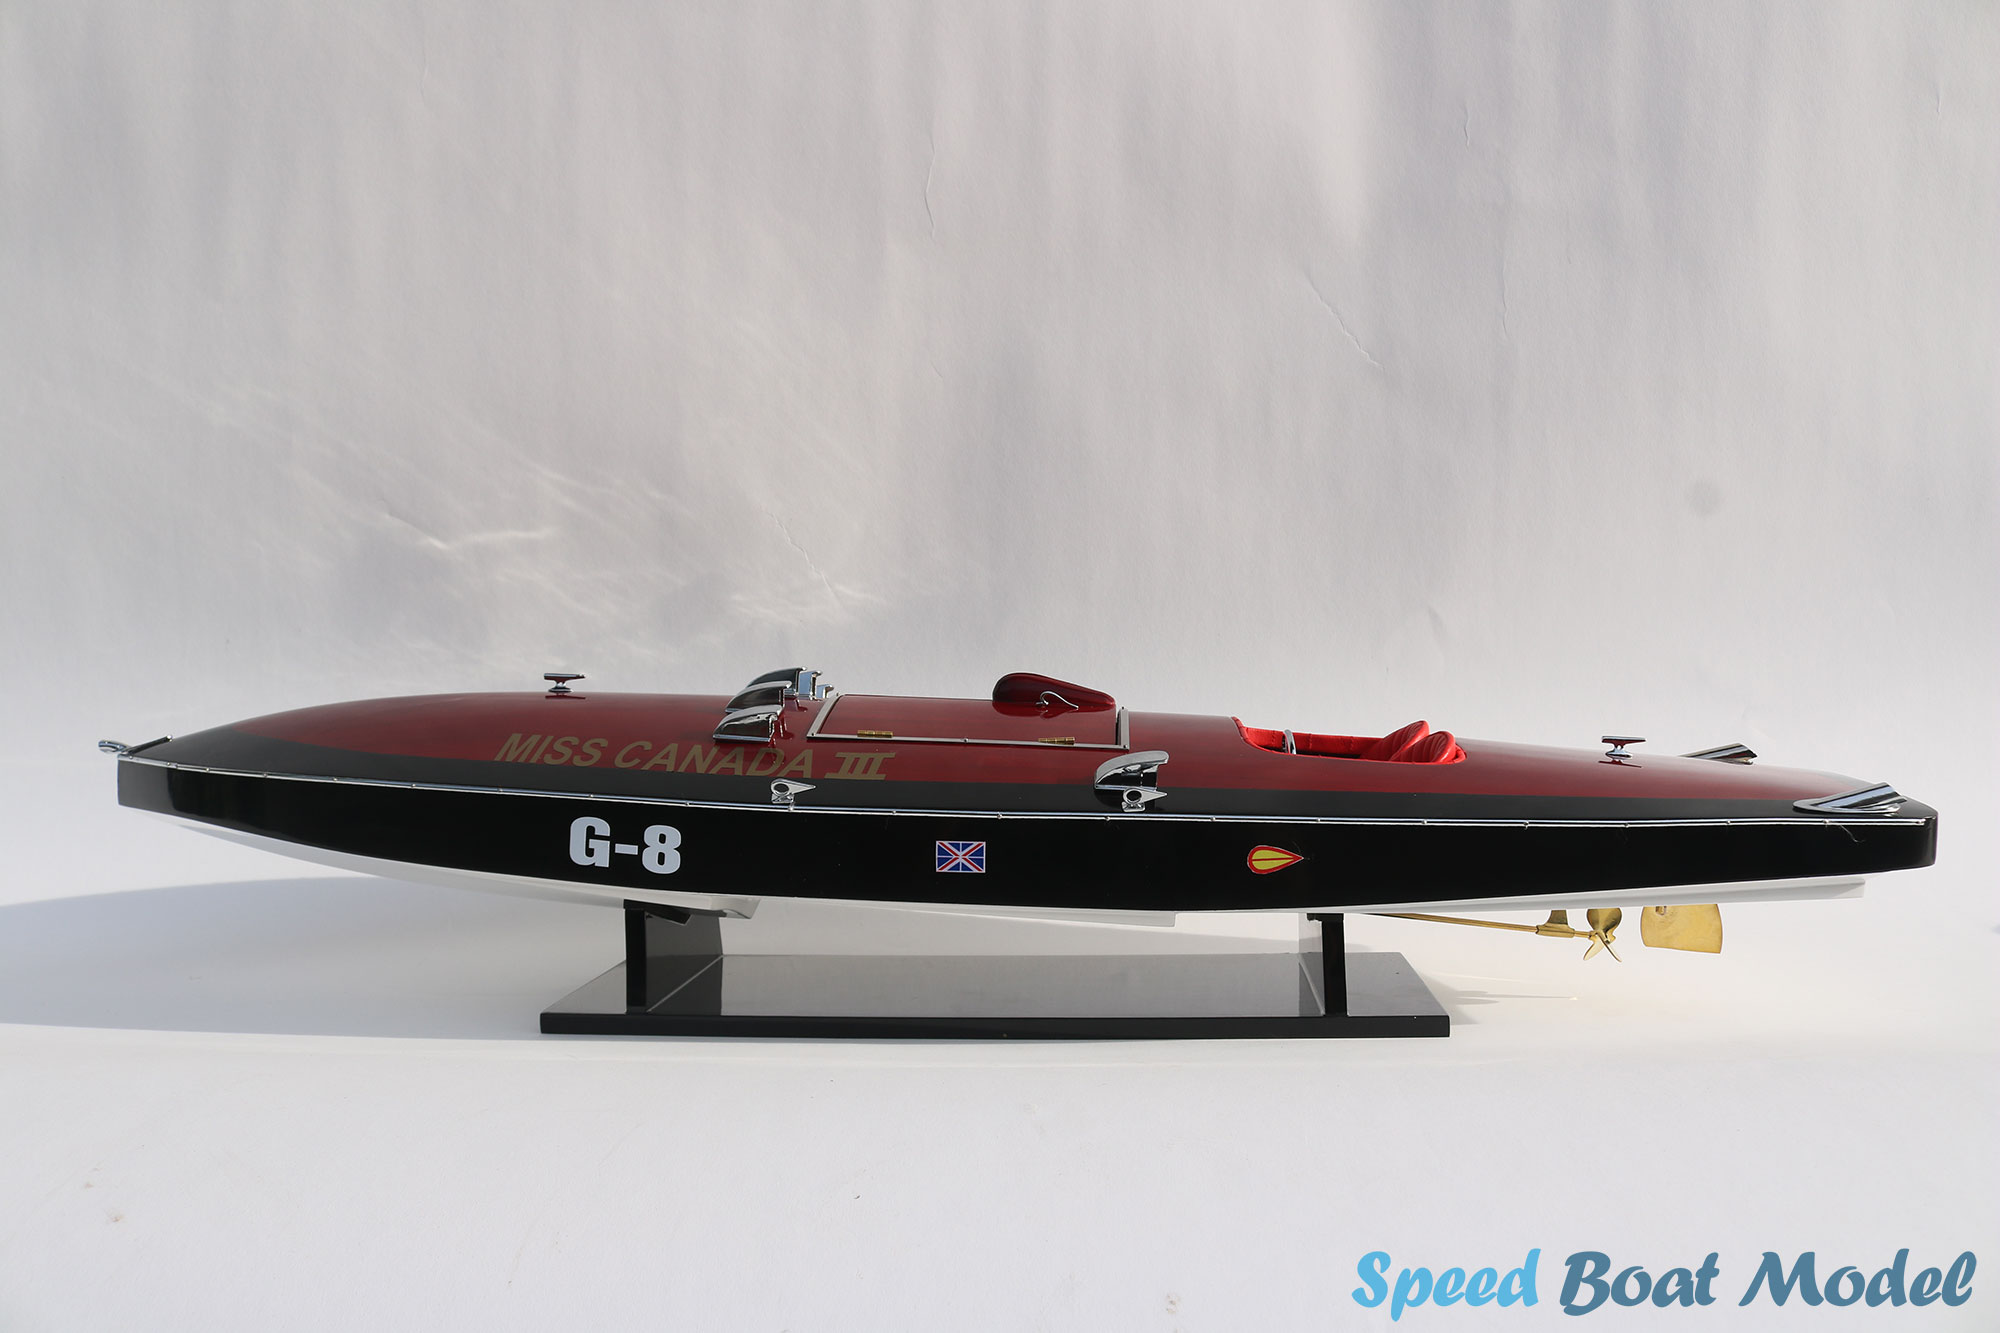 Miss Canada Iii Classic Boat Model 33.4